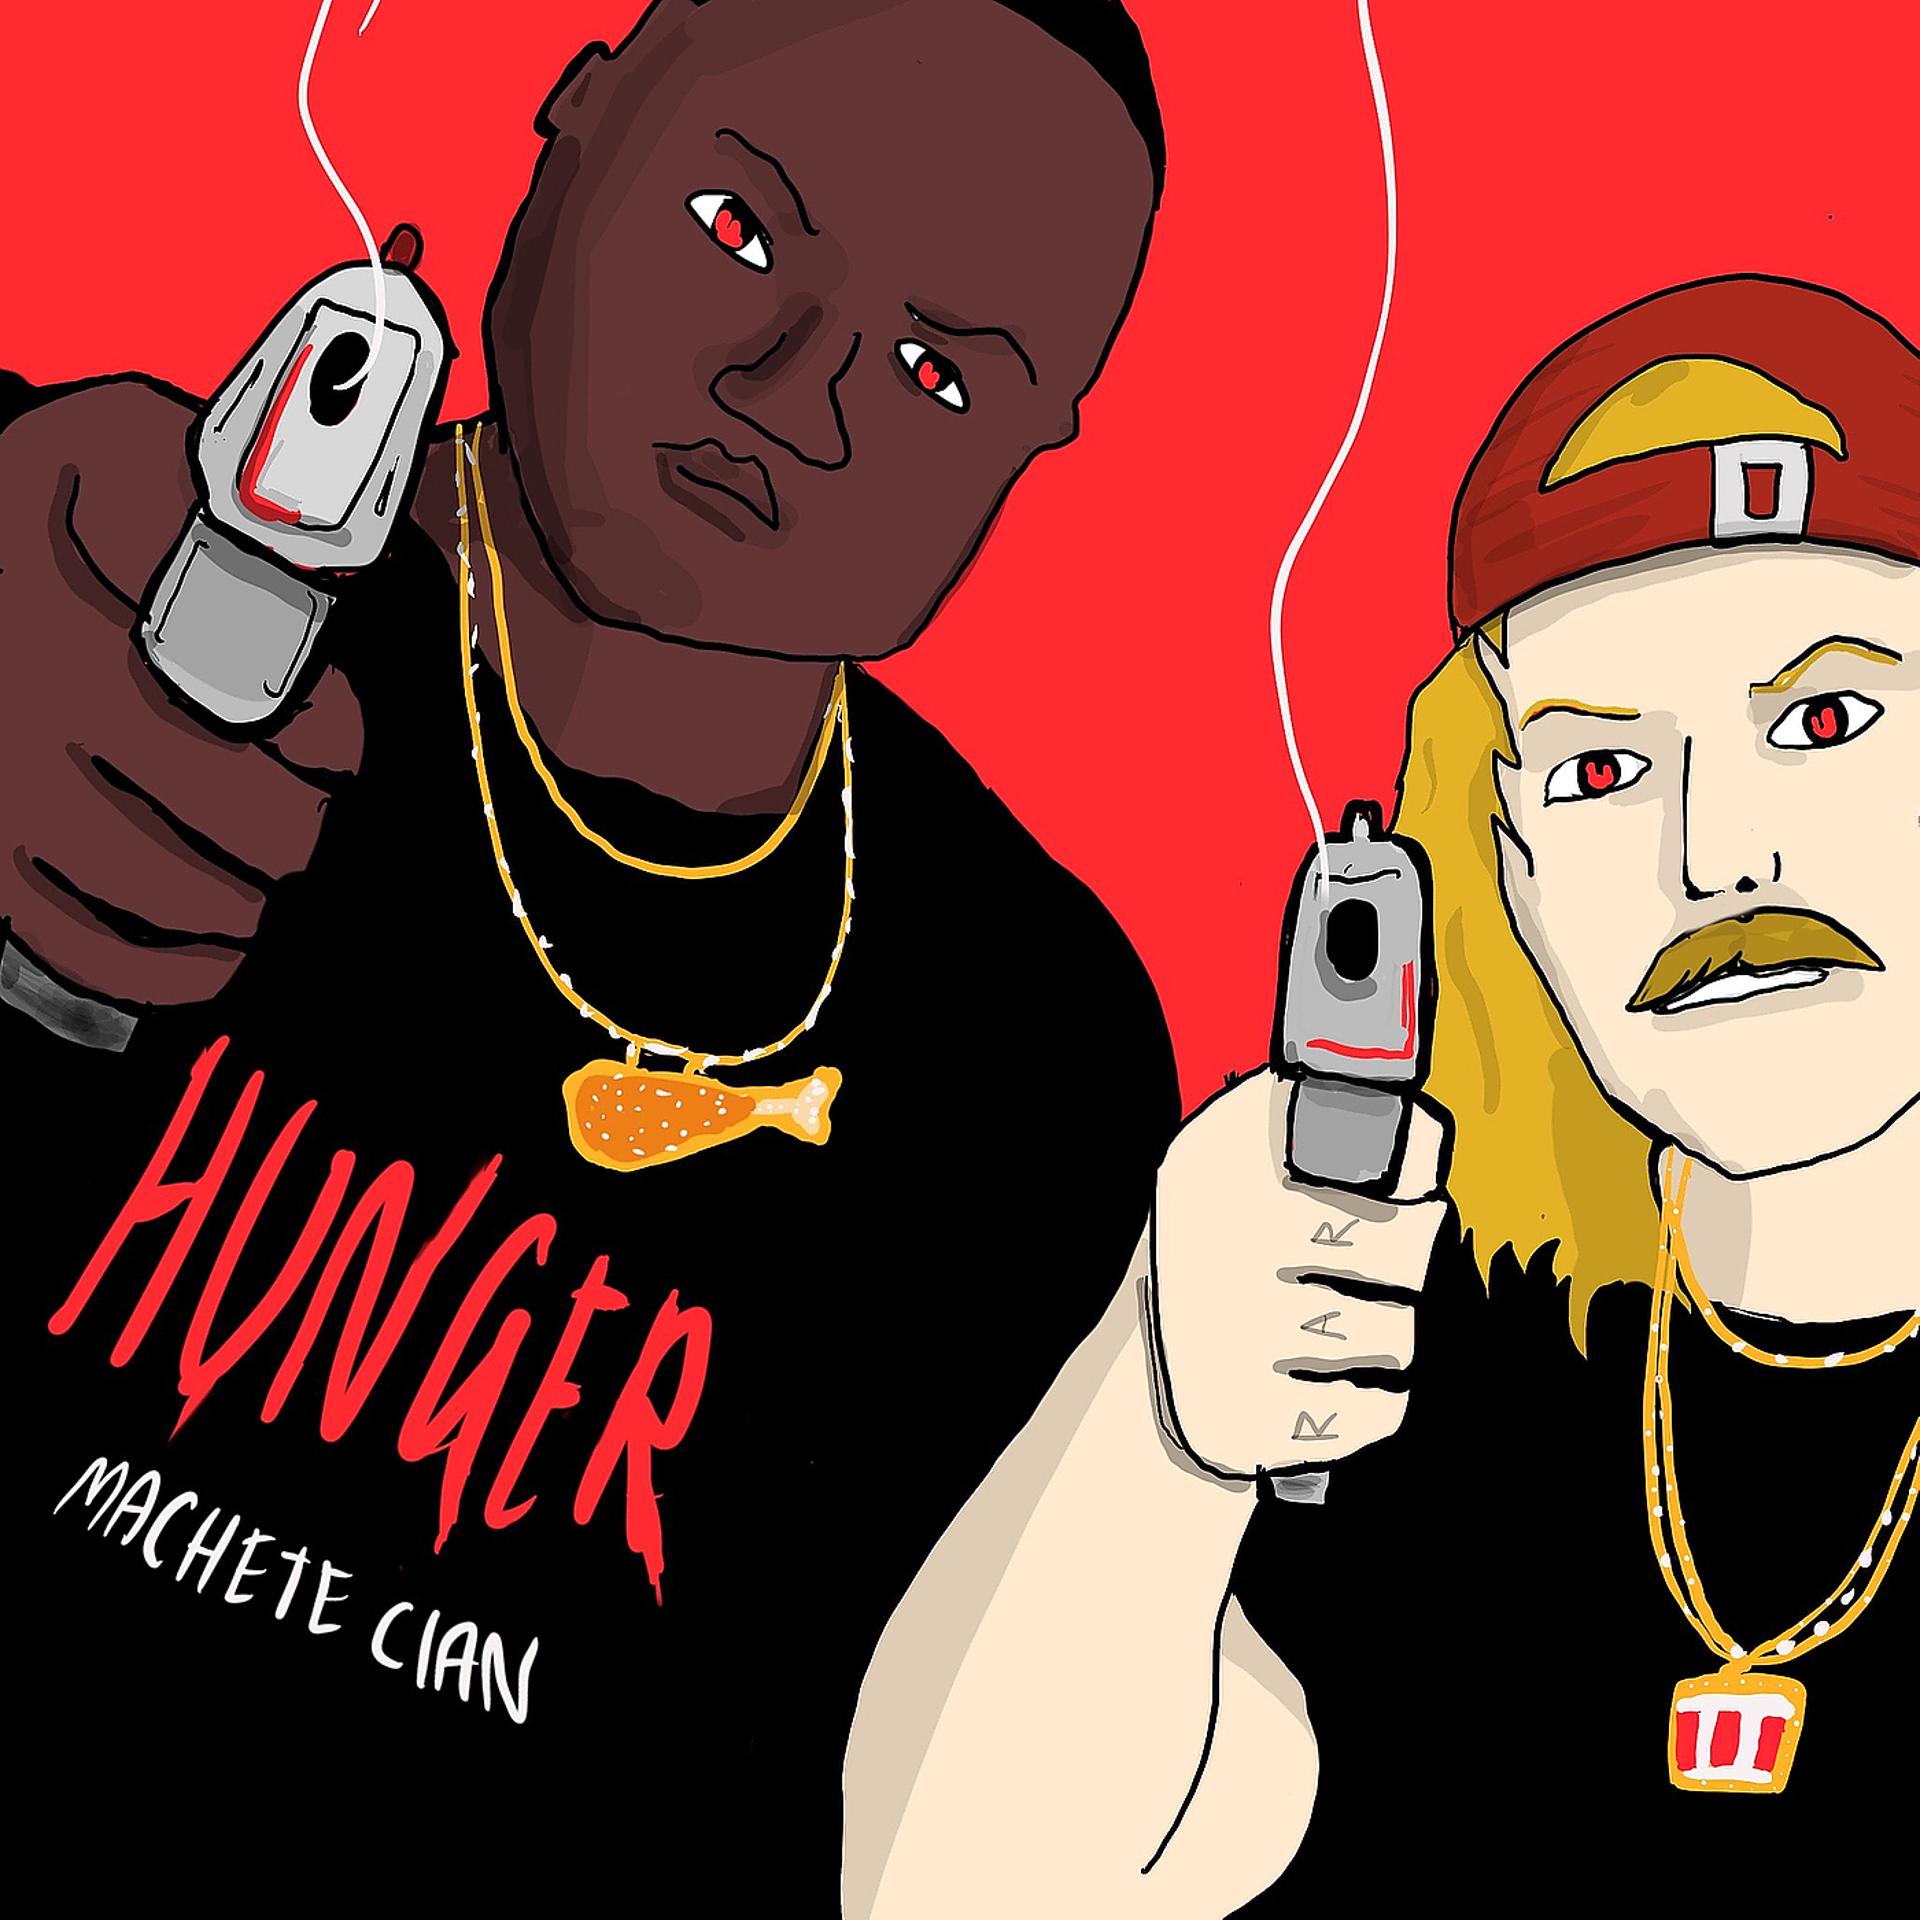 Постер альбома Hunger